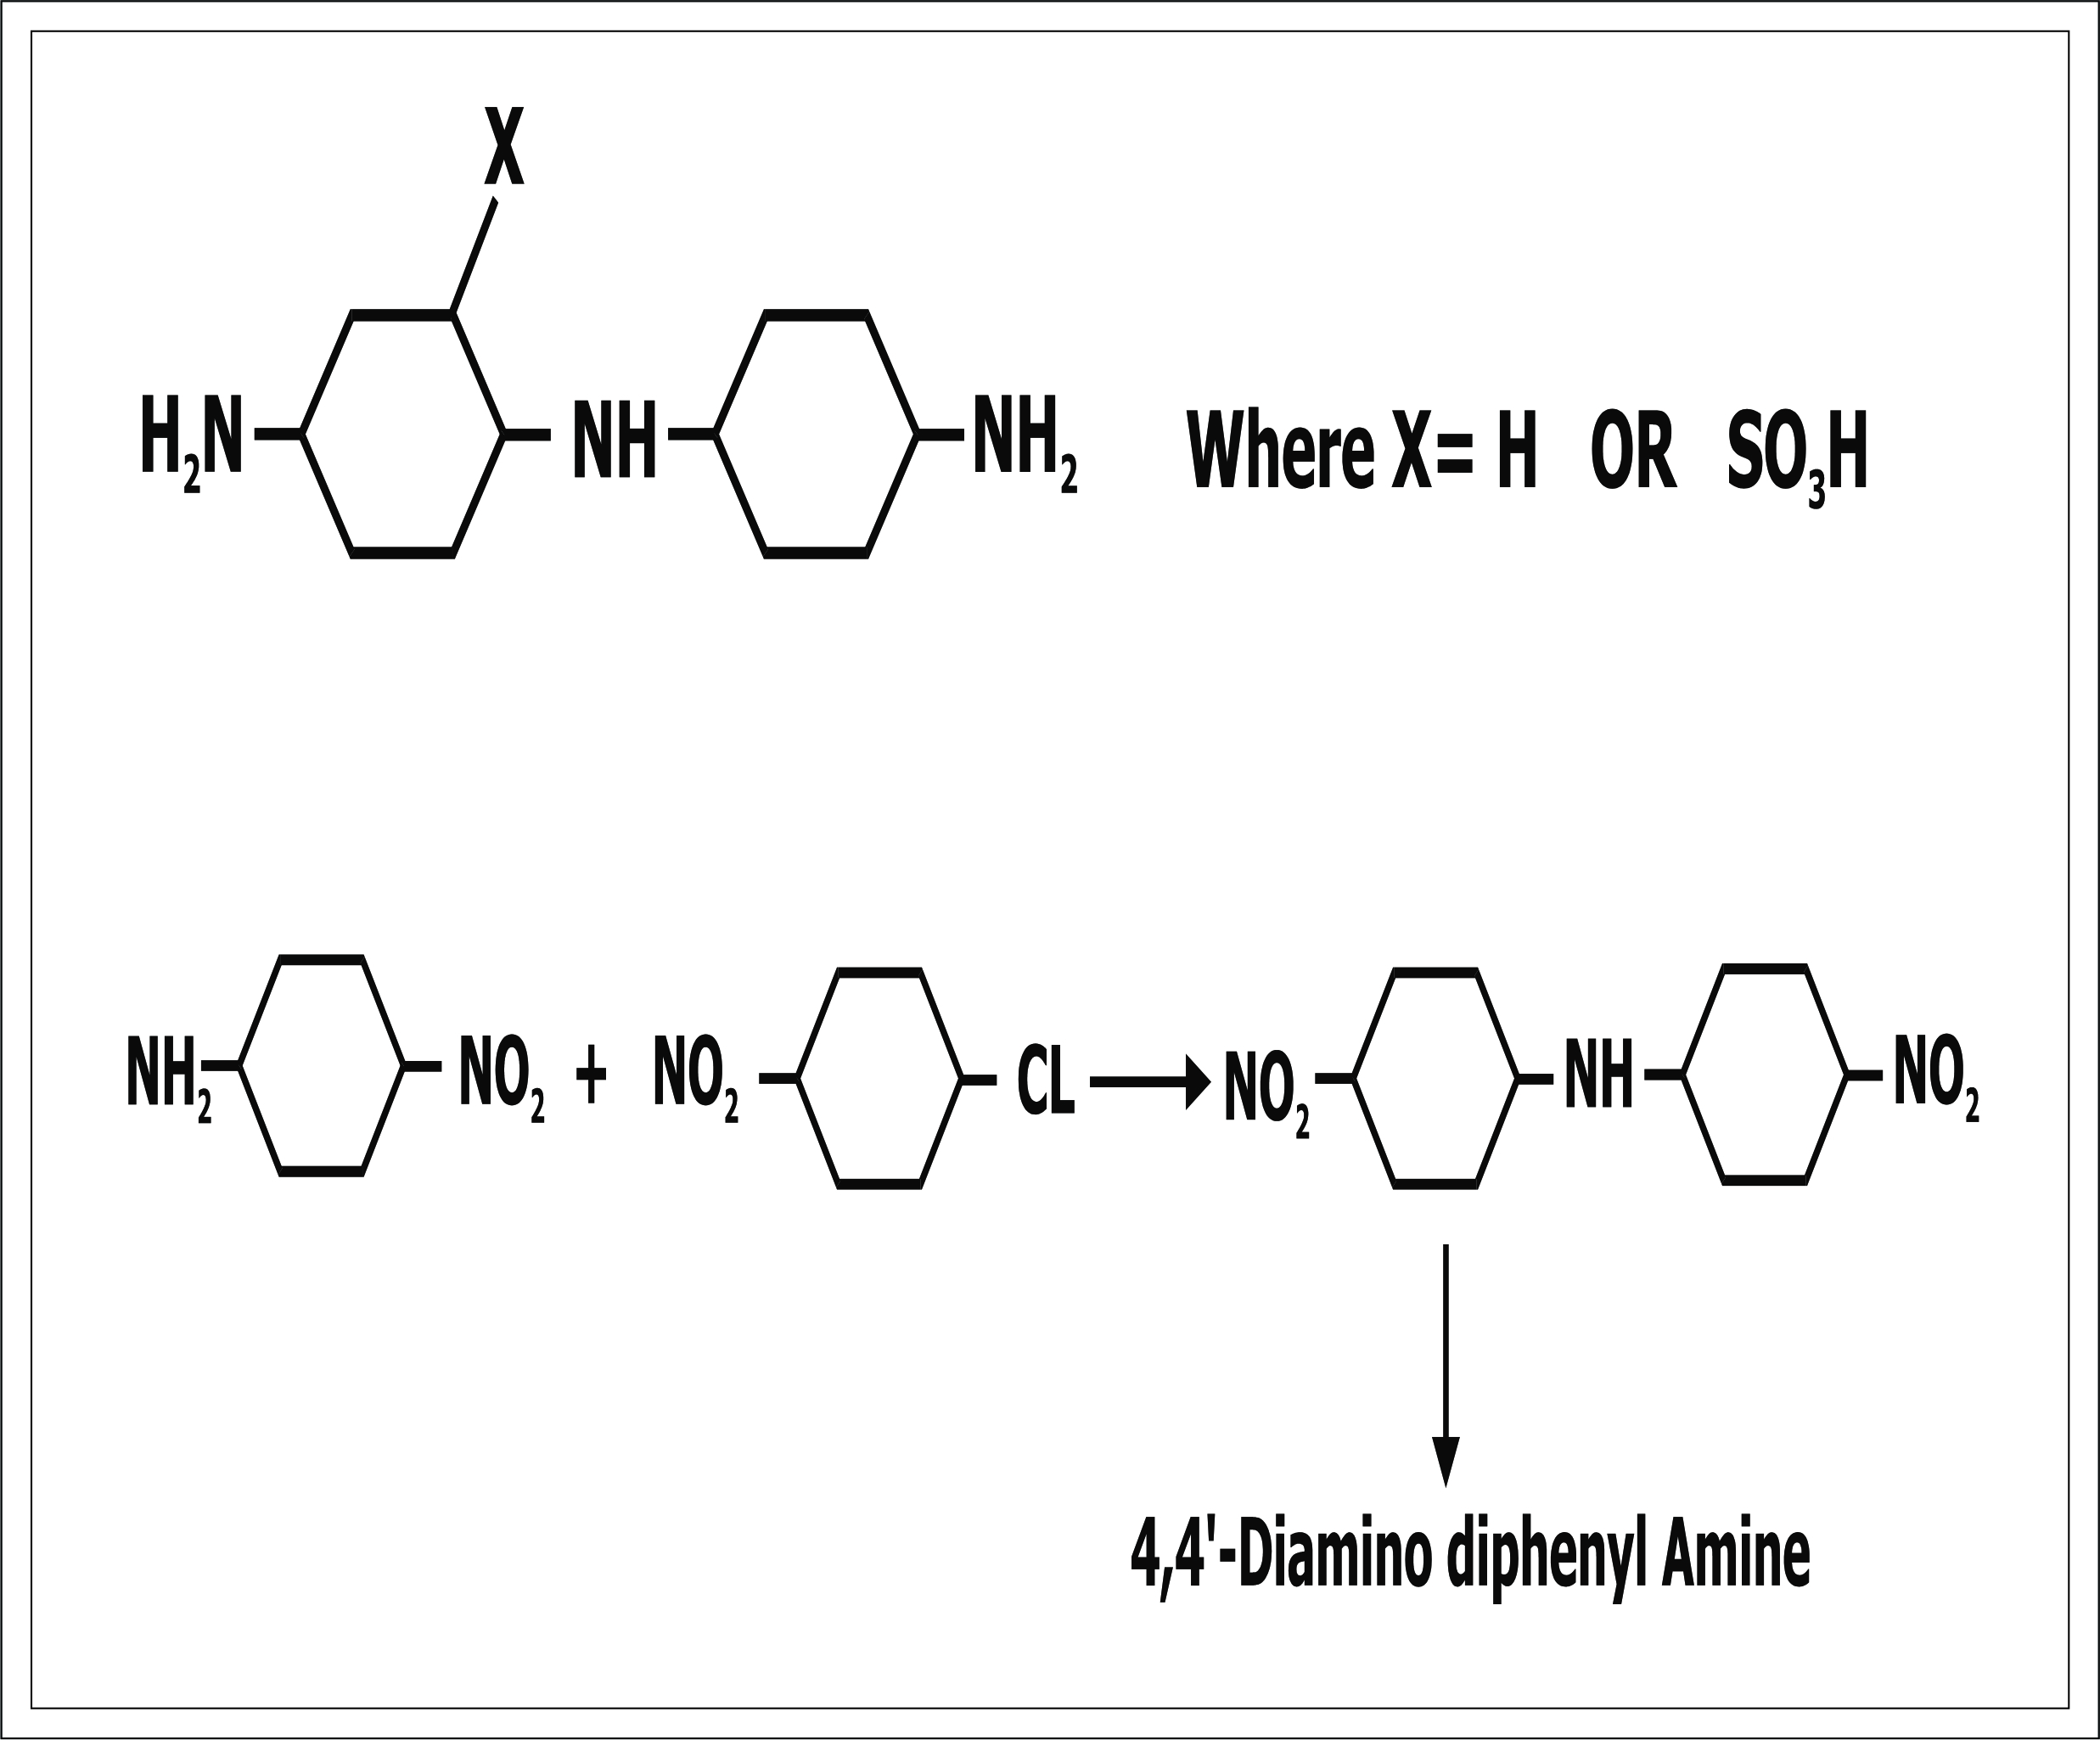 4,4'- diamino diphenyl amines: Explained in brief